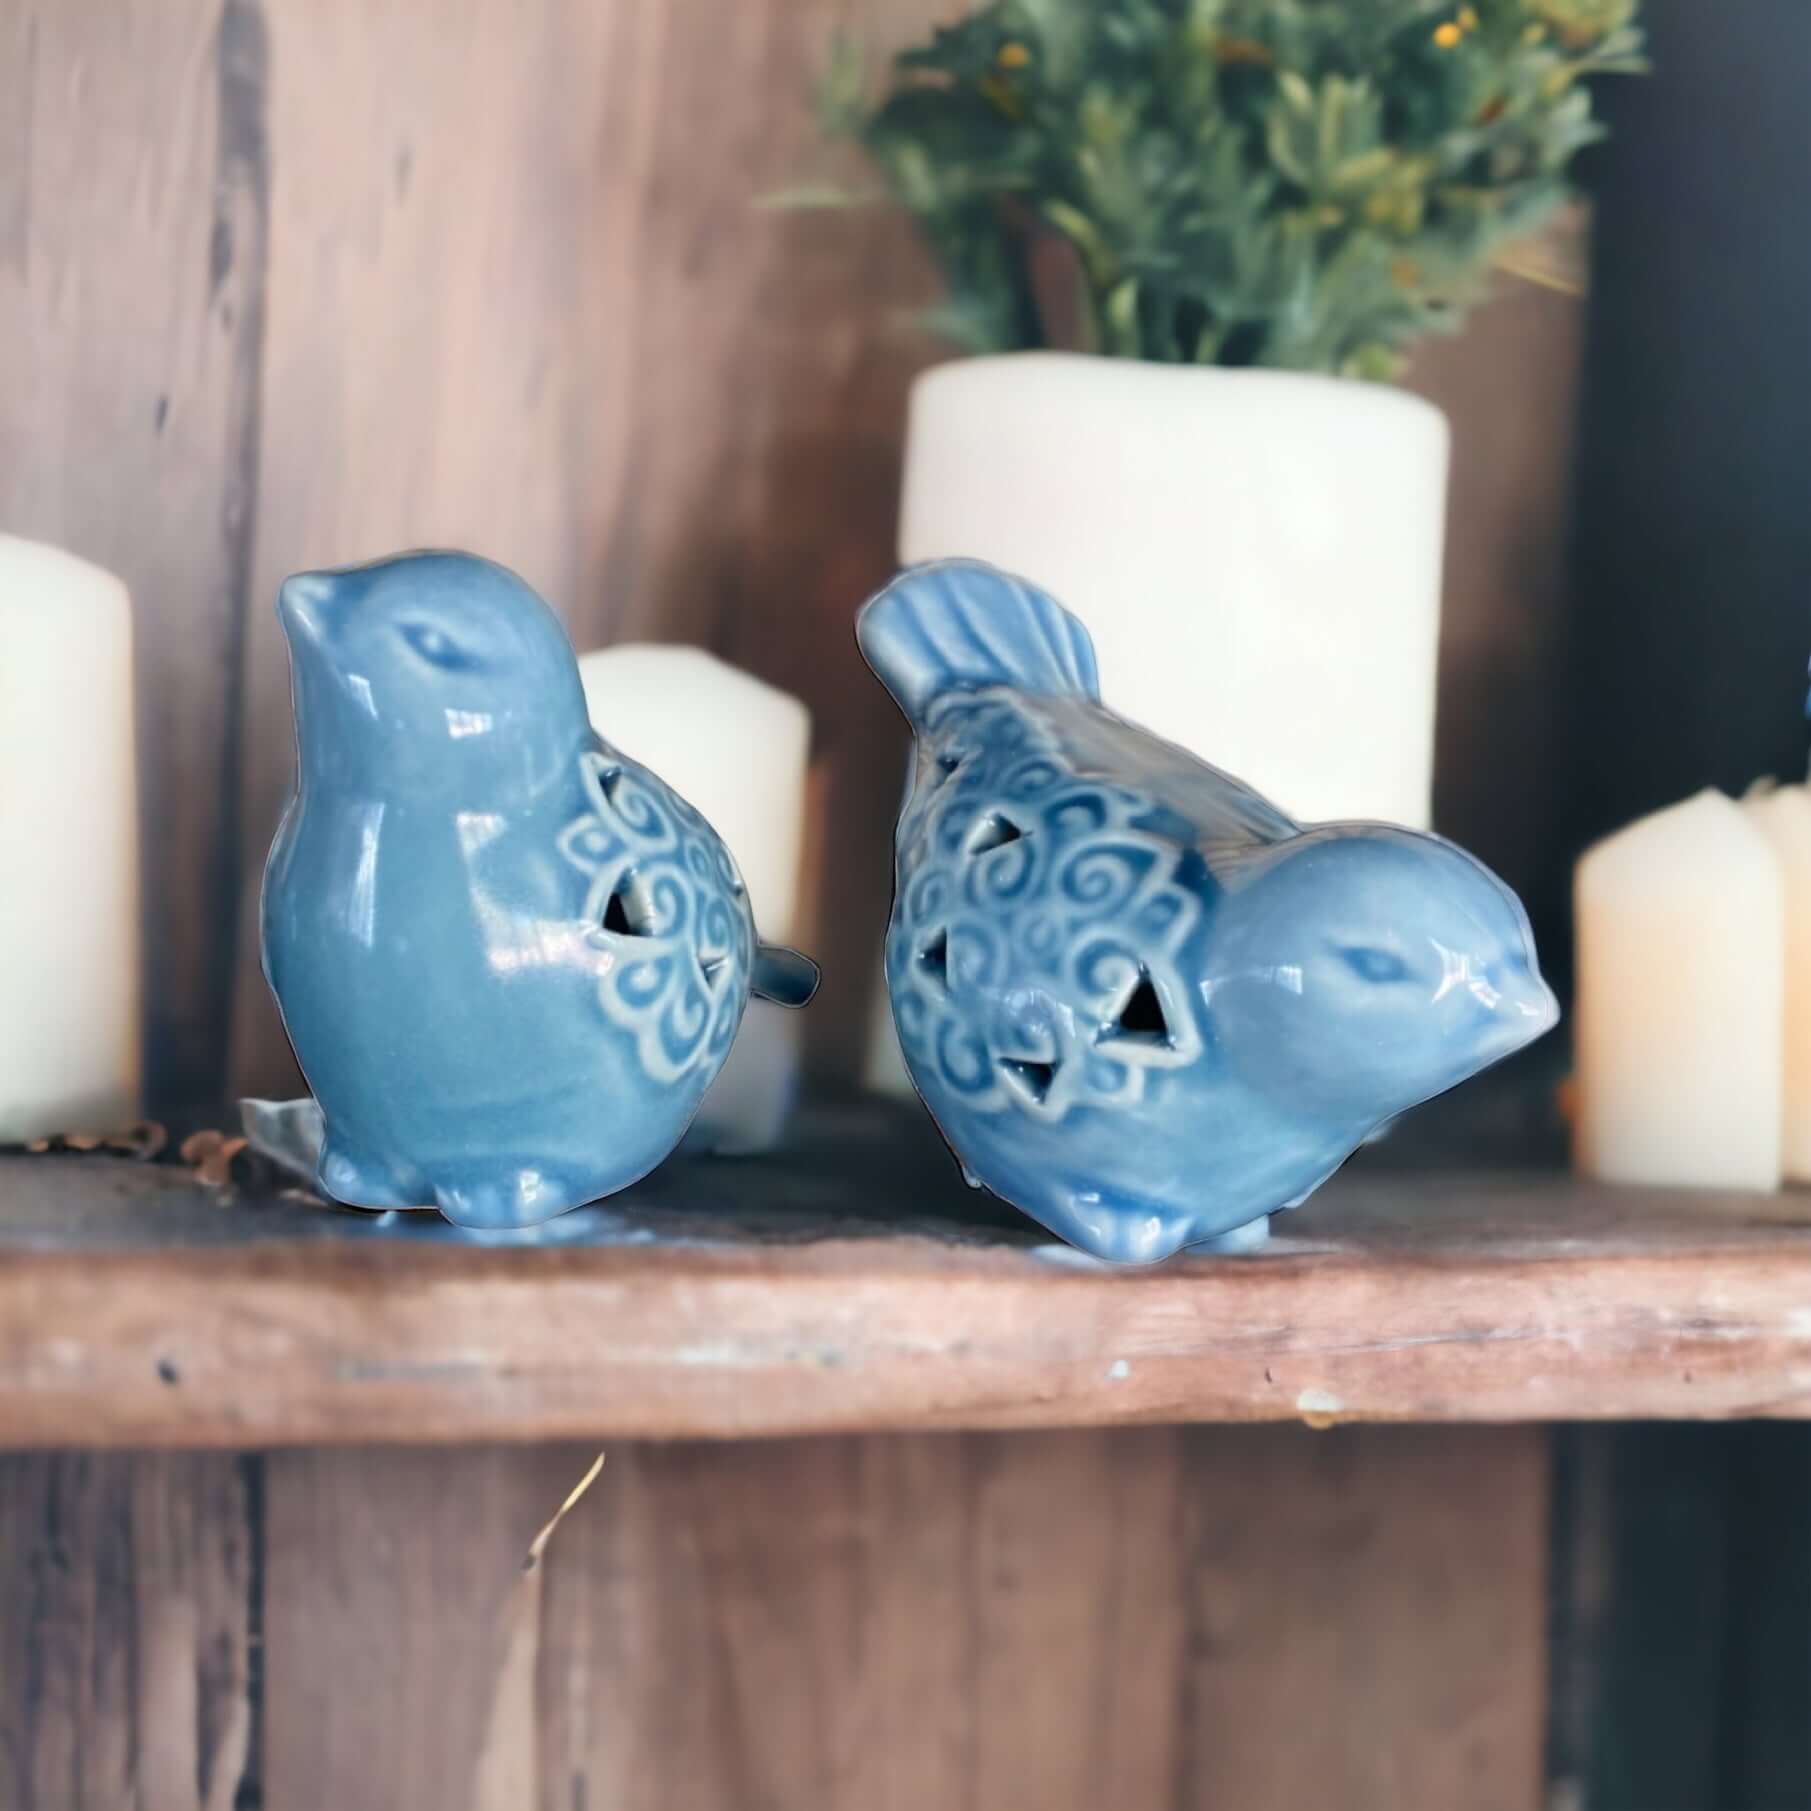 Bird Birds Blue Décor Set Of 2 - The Renmy Store Homewares & Gifts 